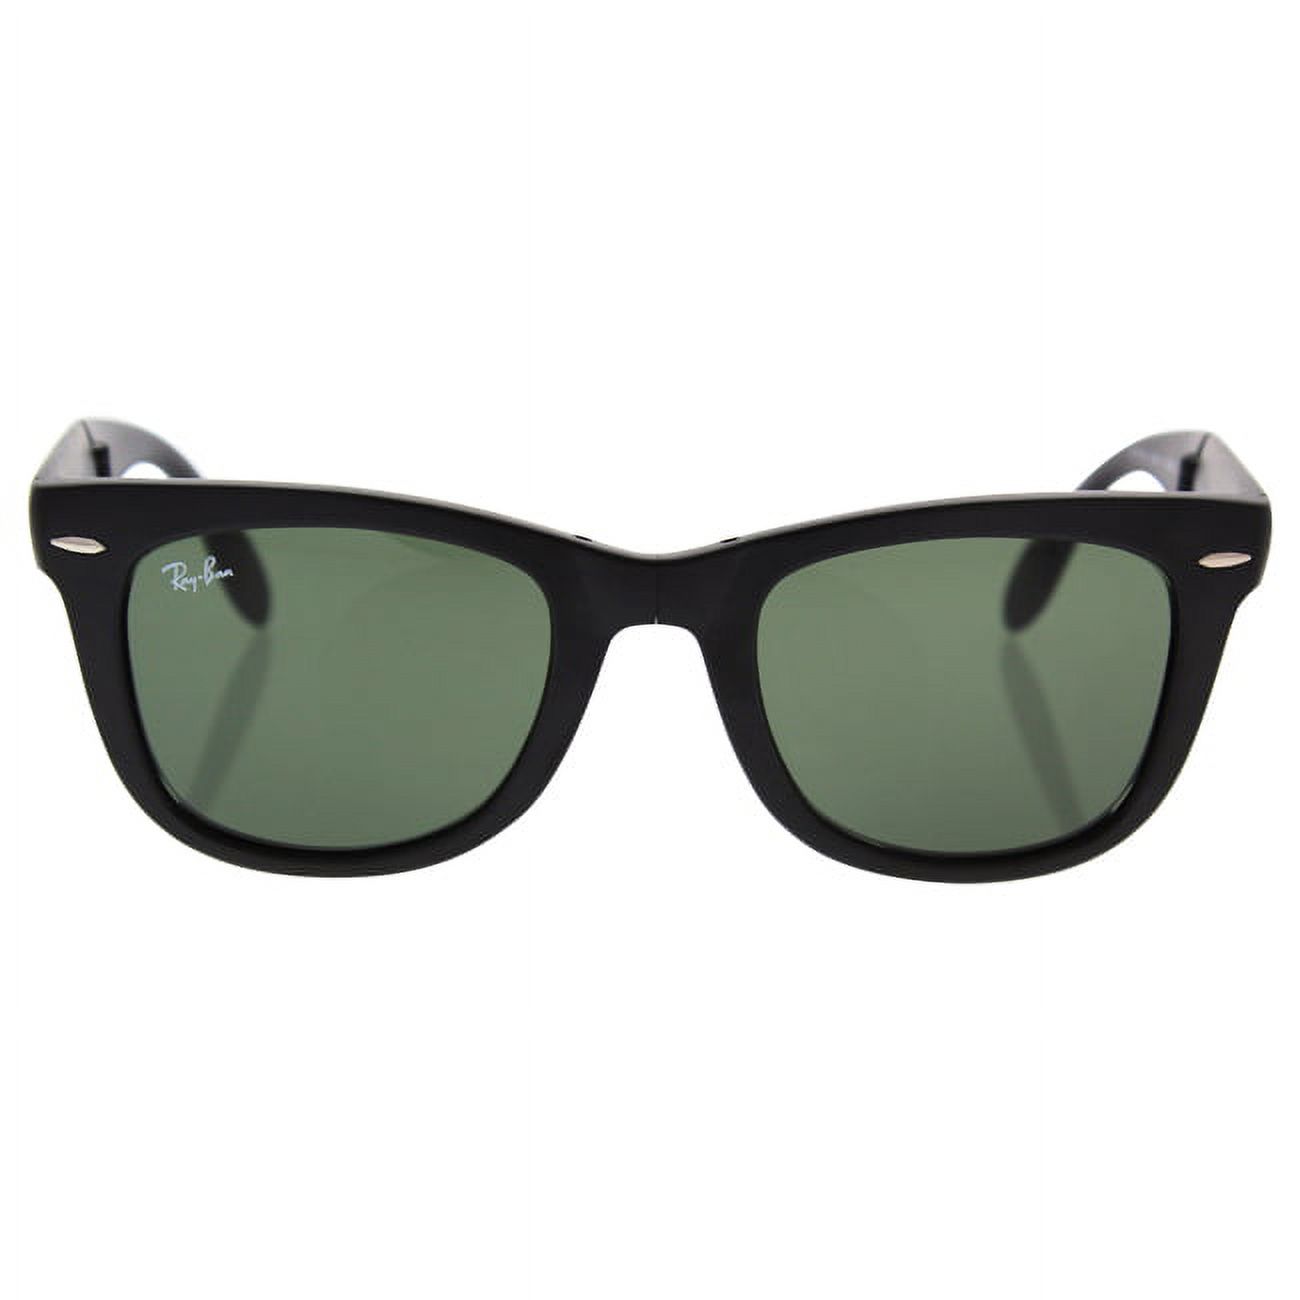 Ray Ban RB 4105 601-S Folding Wayfarer - Black Matte/Green by Ray Ban for Men - 50-22-140 mm Sunglasses - image 1 of 7